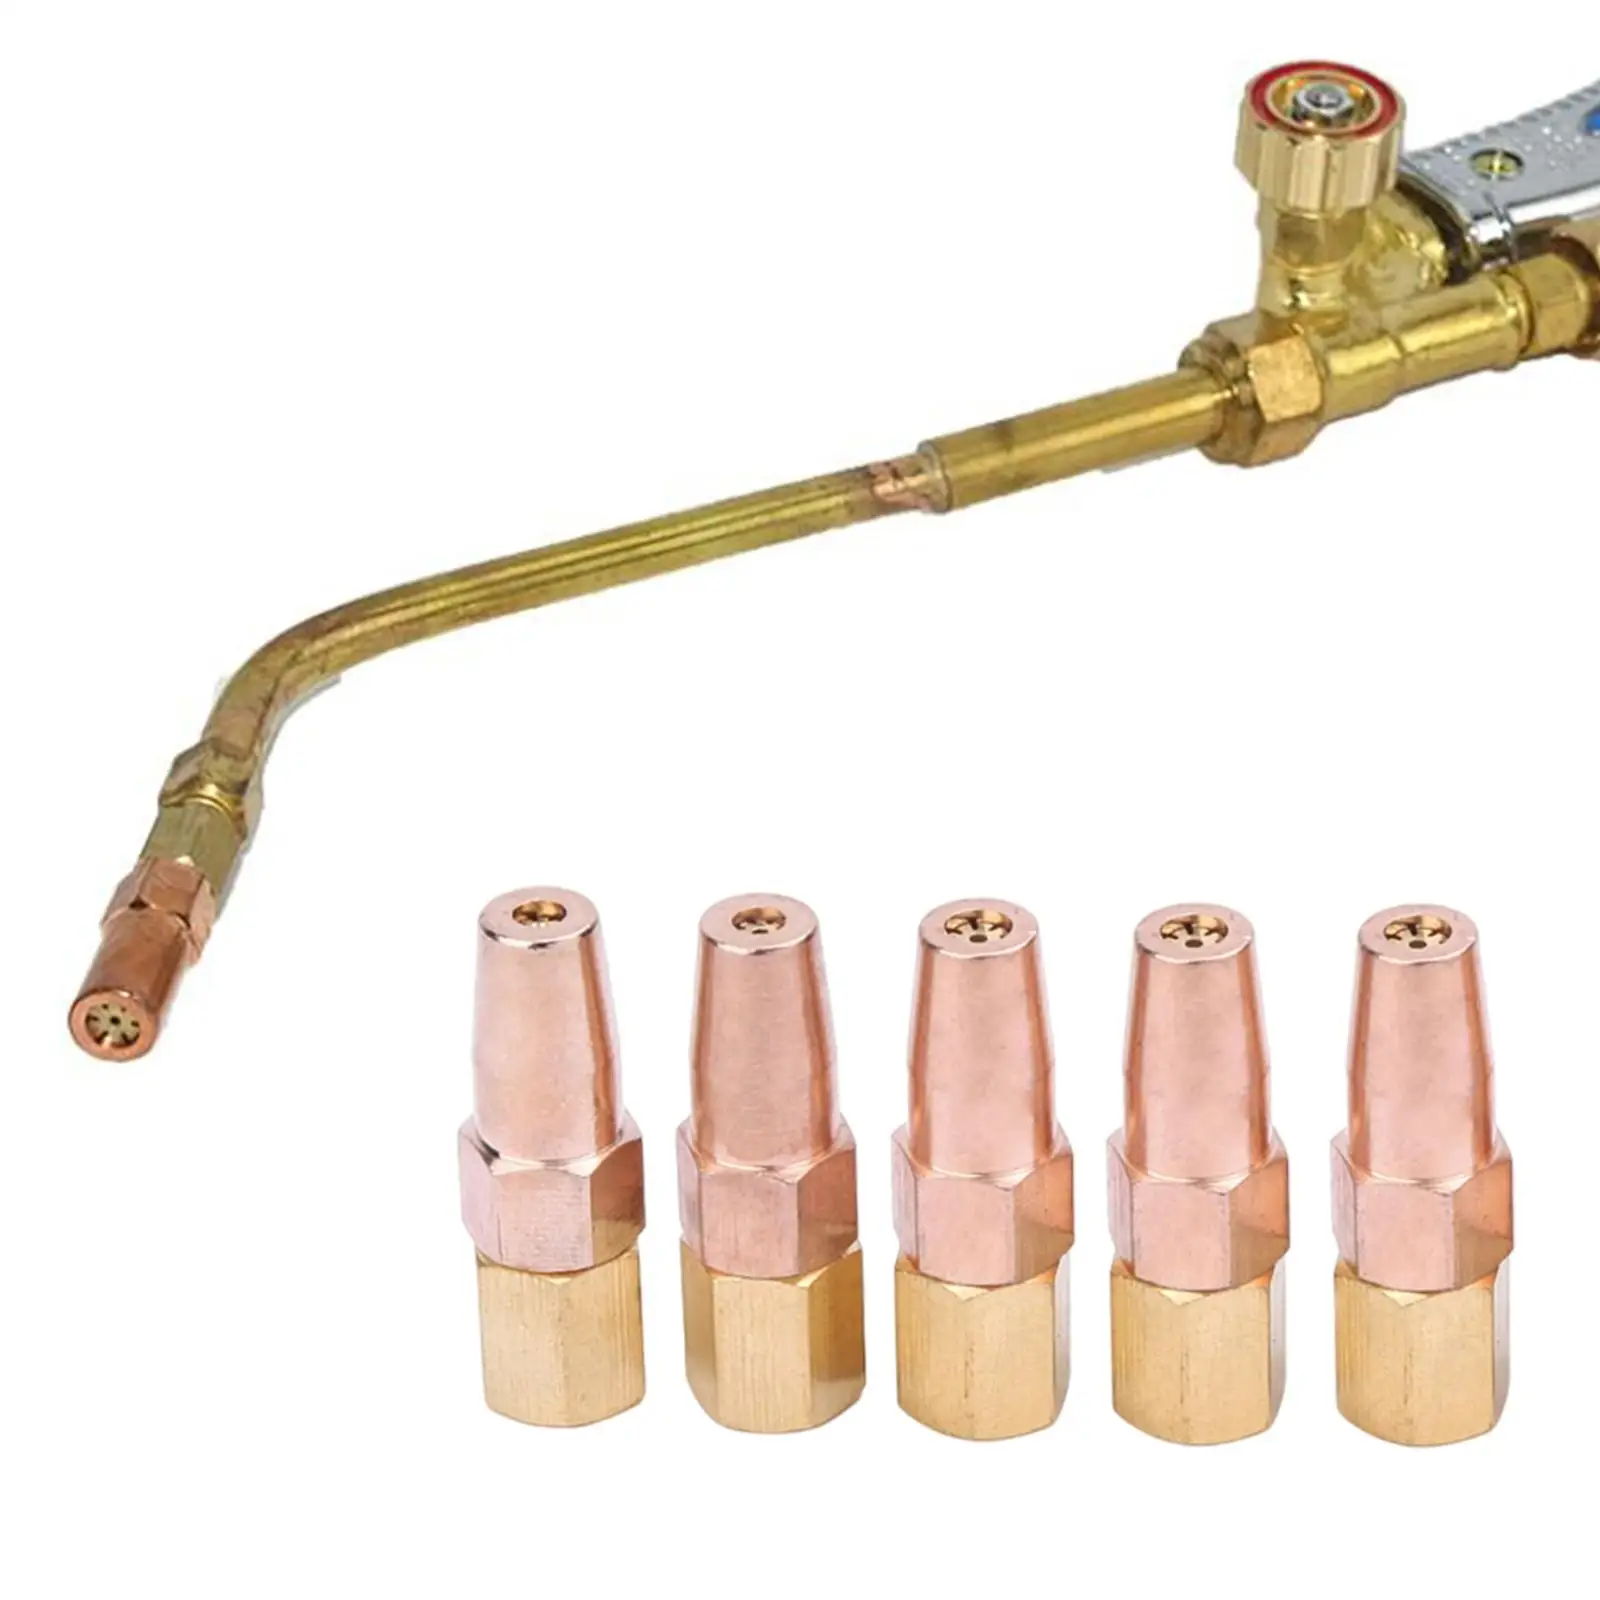 5 Pcs Propane Gas Welding Nozzle H01-6 Gas Nozzle for Heat Treating Priming